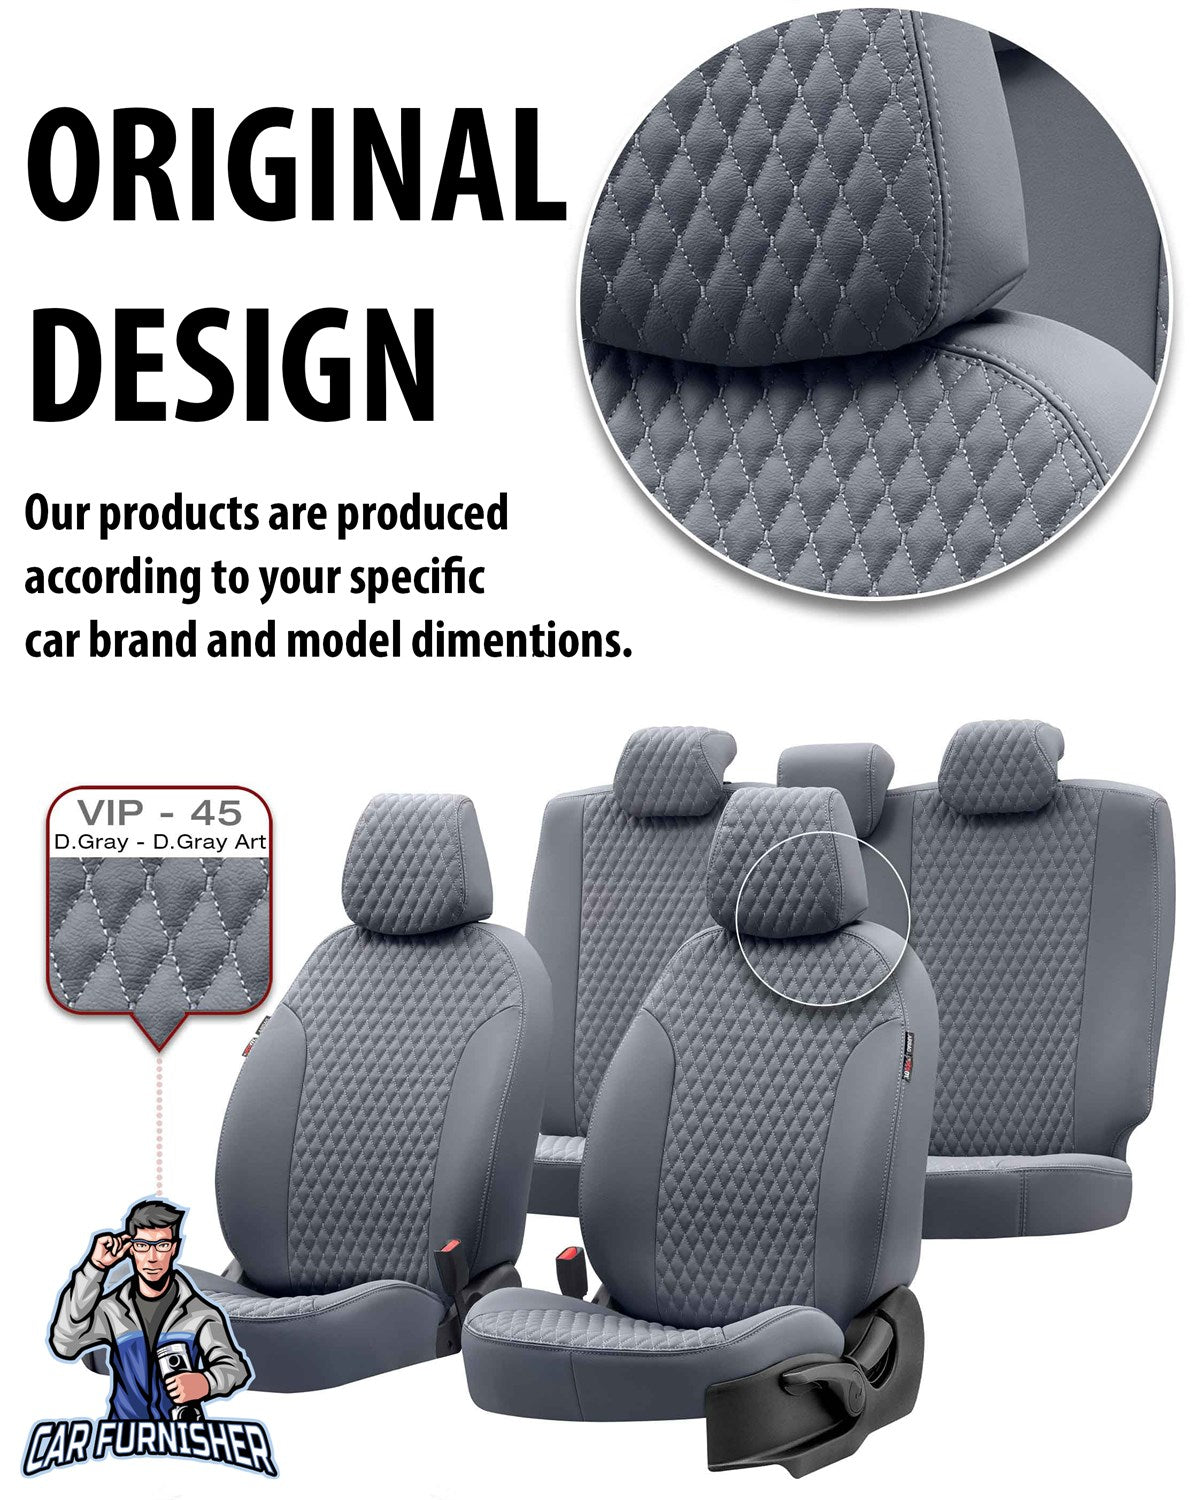 Hyundai Sonata Seat Covers Amsterdam Leather Design Ivory Leather